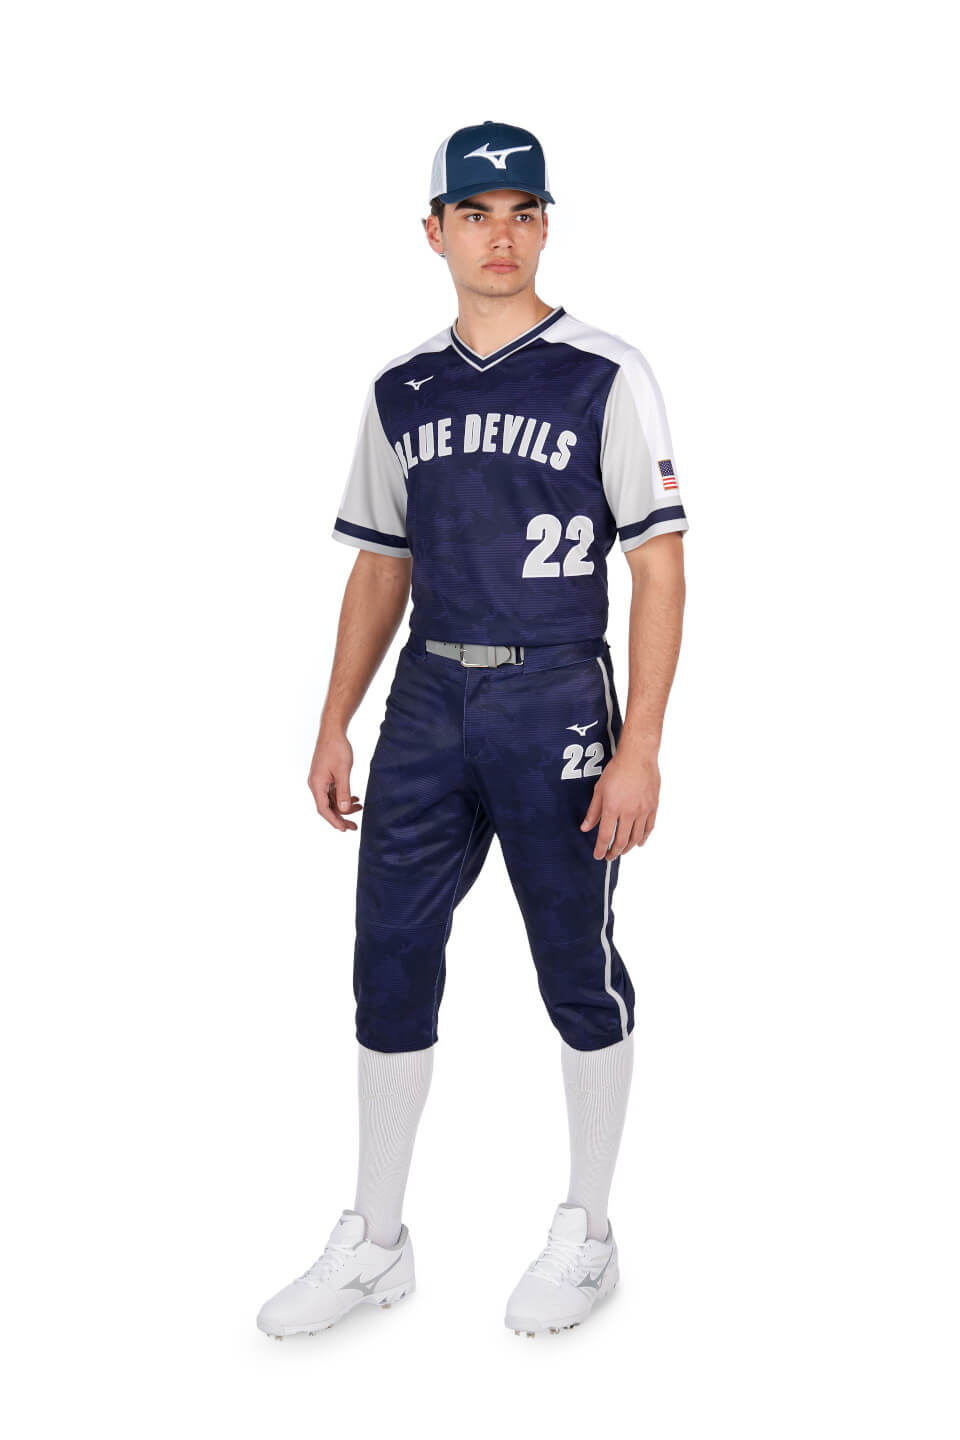 travel baseball uniforms